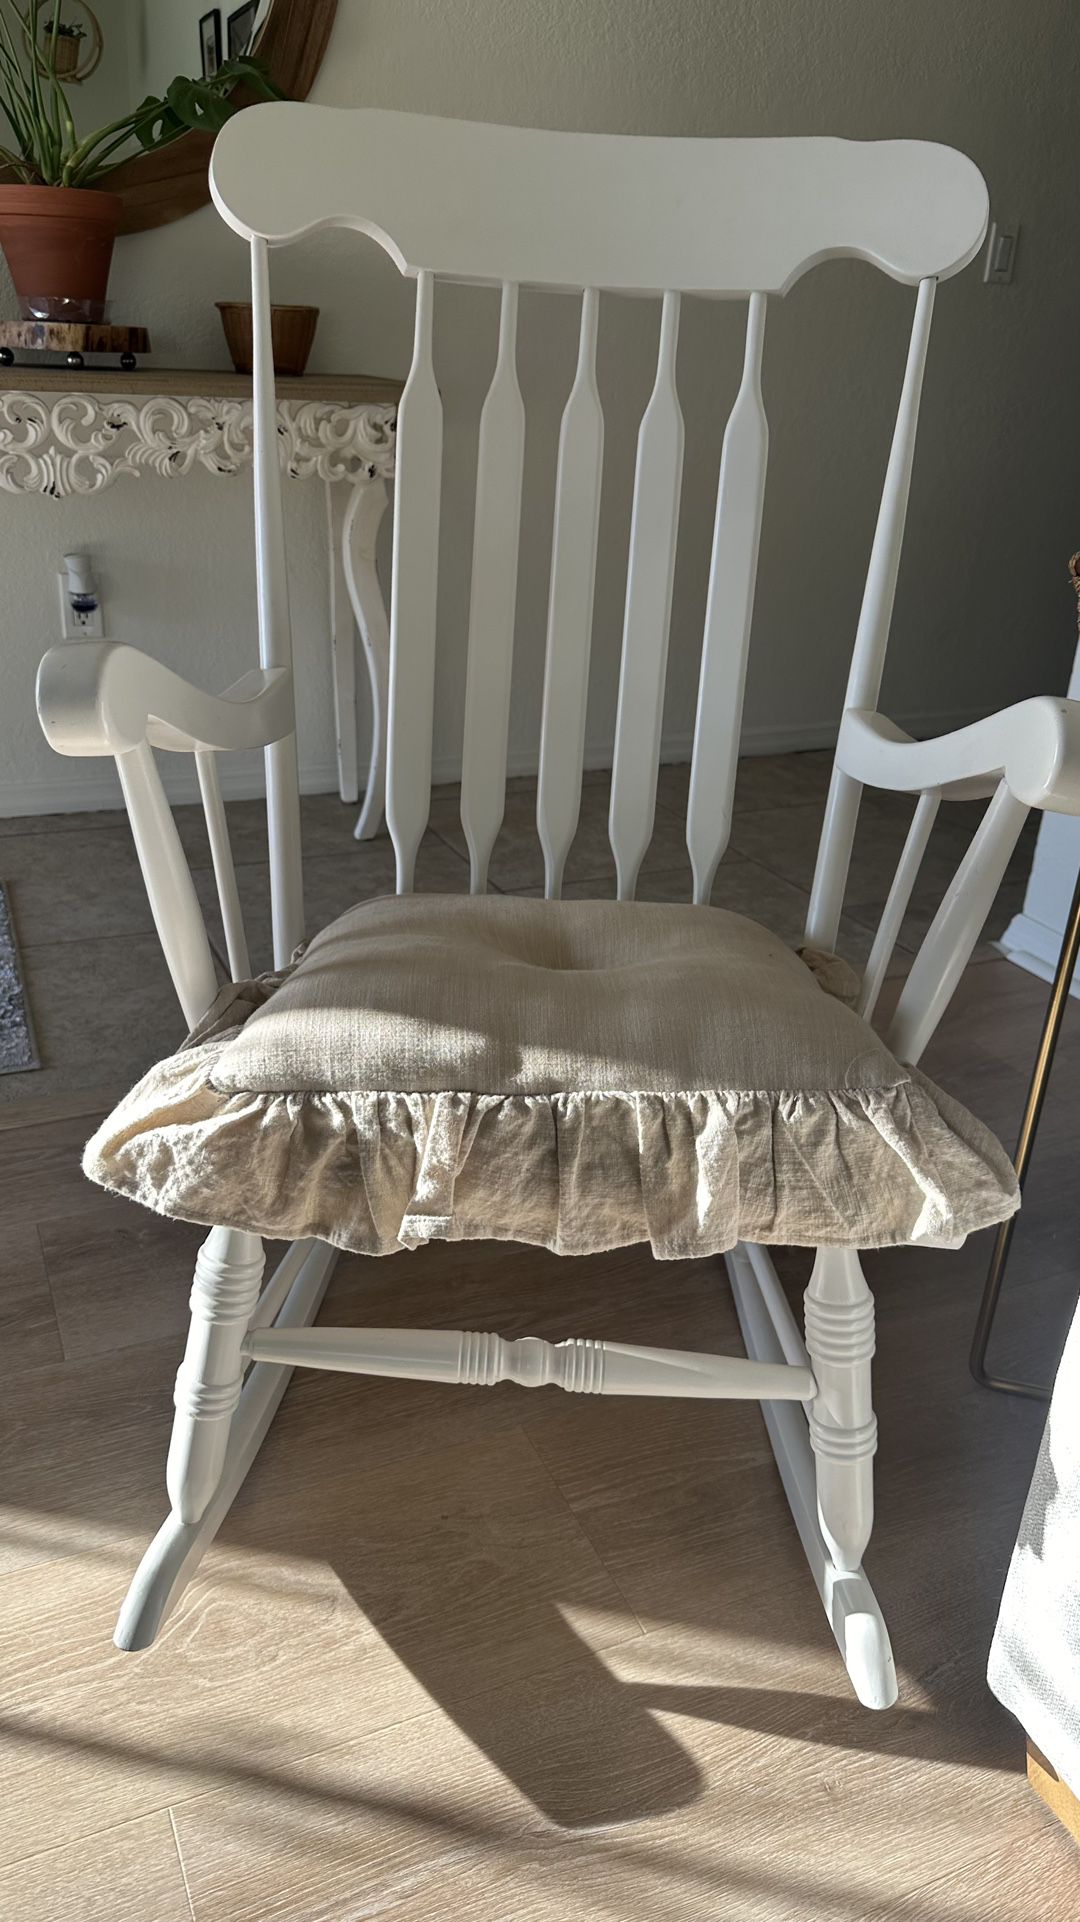 Rocking Chair - White Wooden Chair